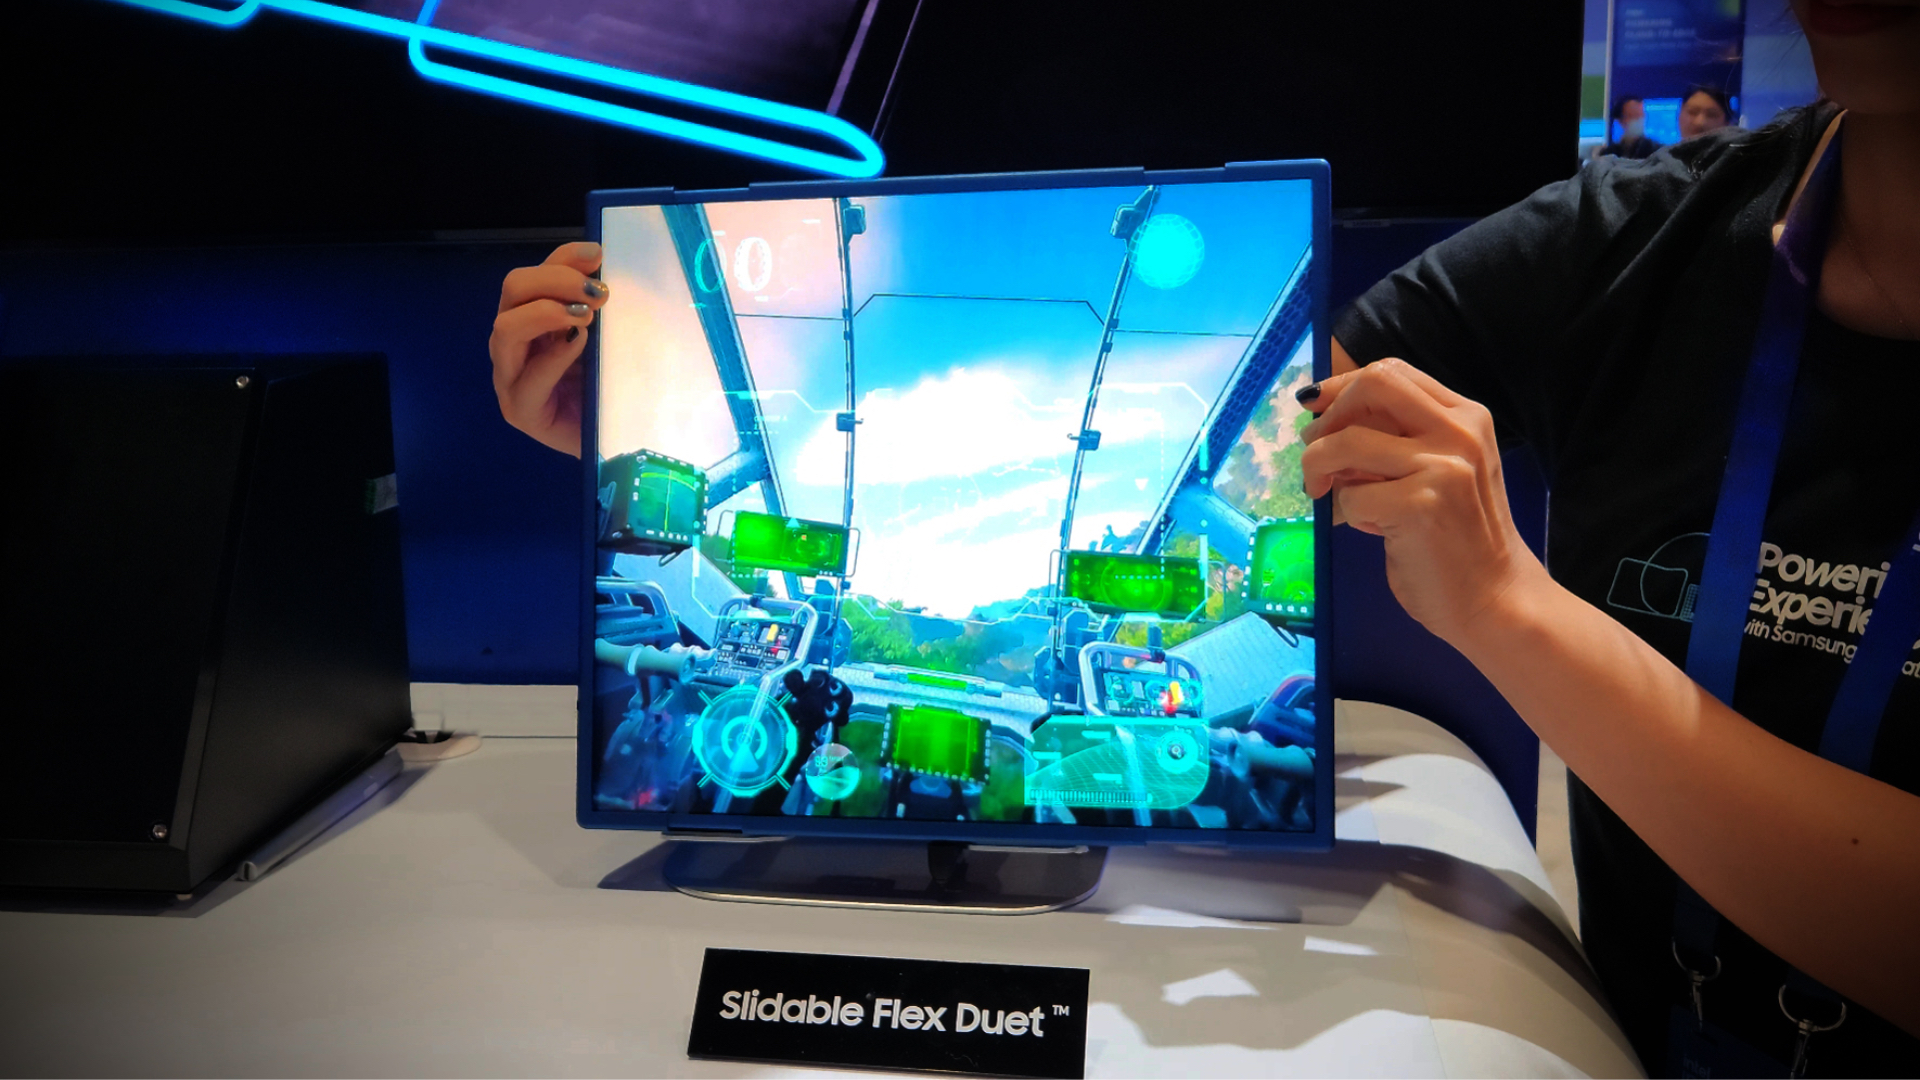 Ecrã OLED Samsung Sliding Flex Duet